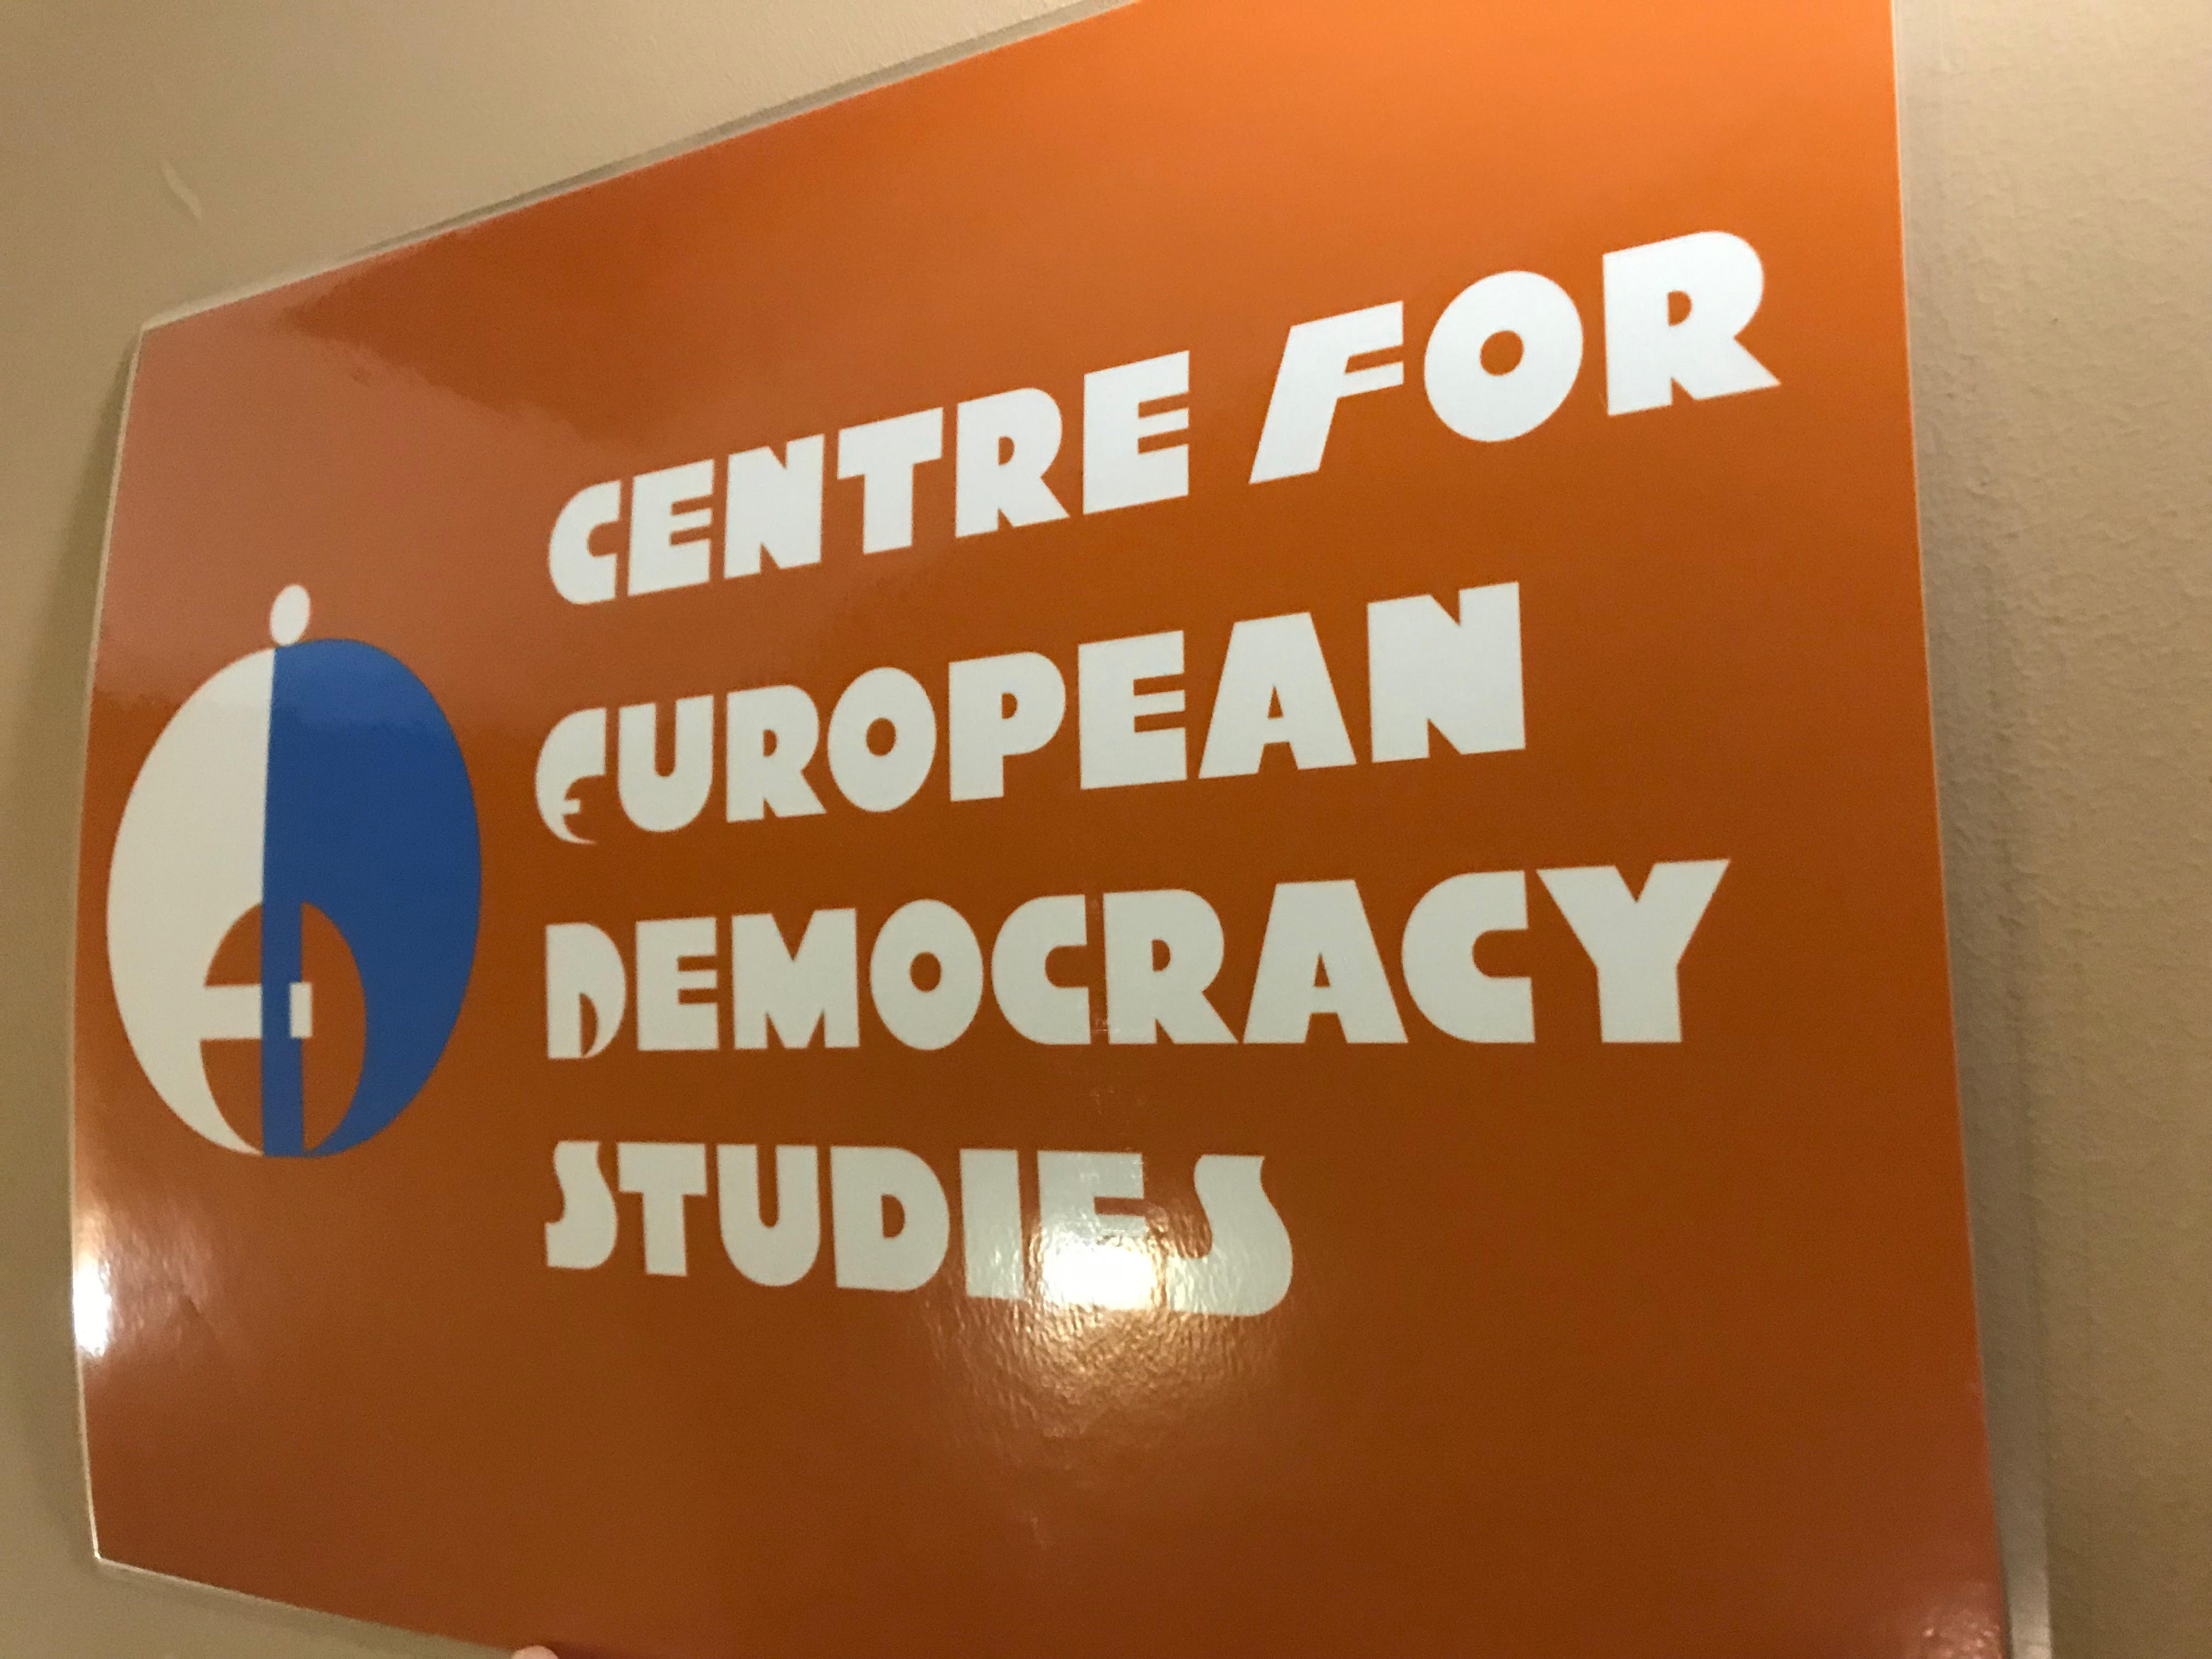 Center for European Democracy Studies